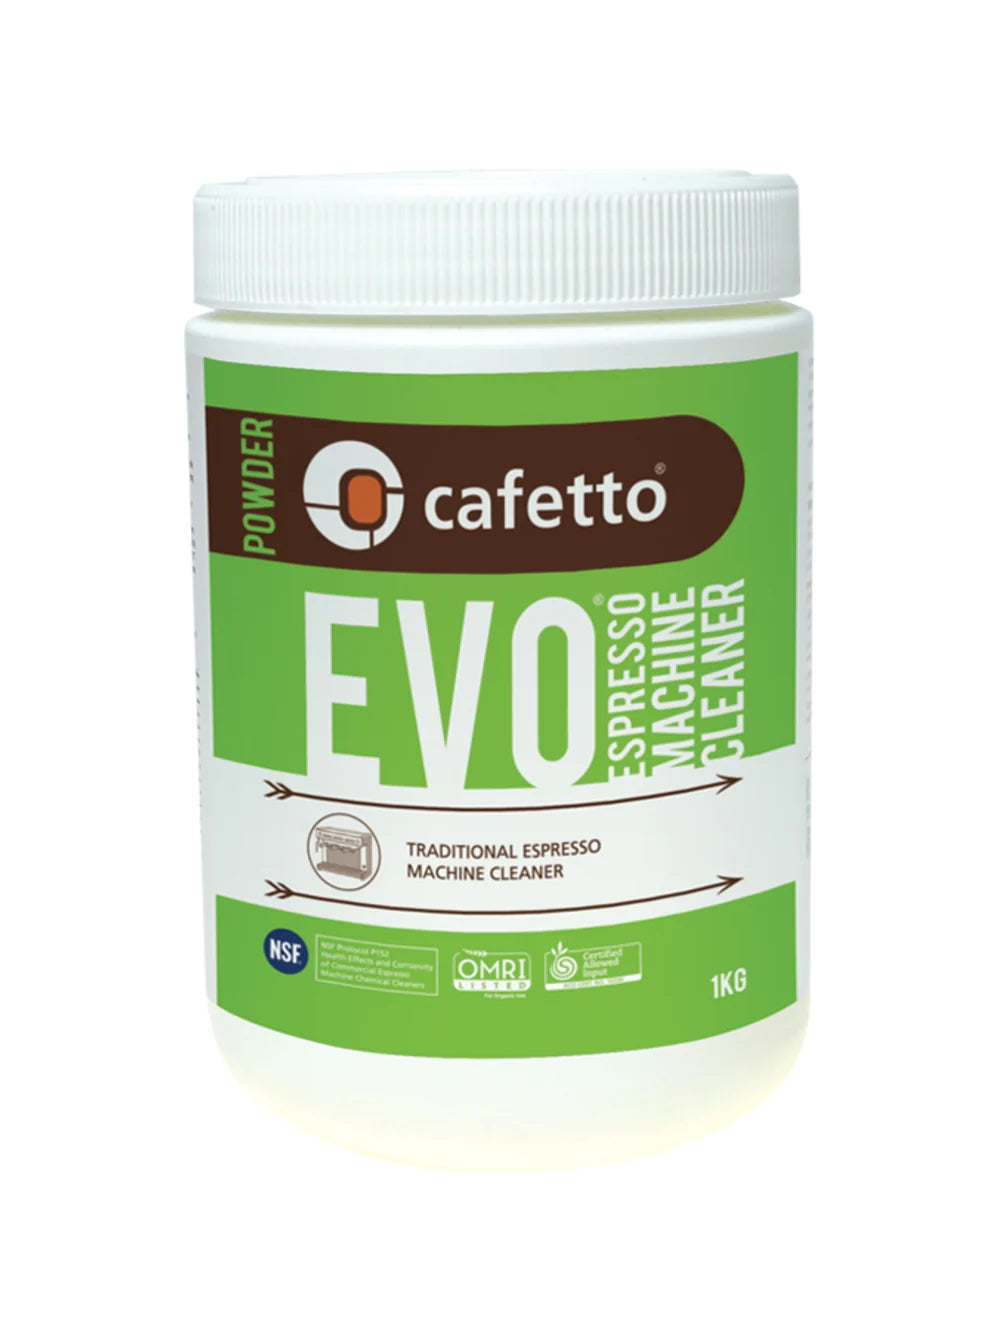 Cafetto EVO Nettoyeur - Image 1